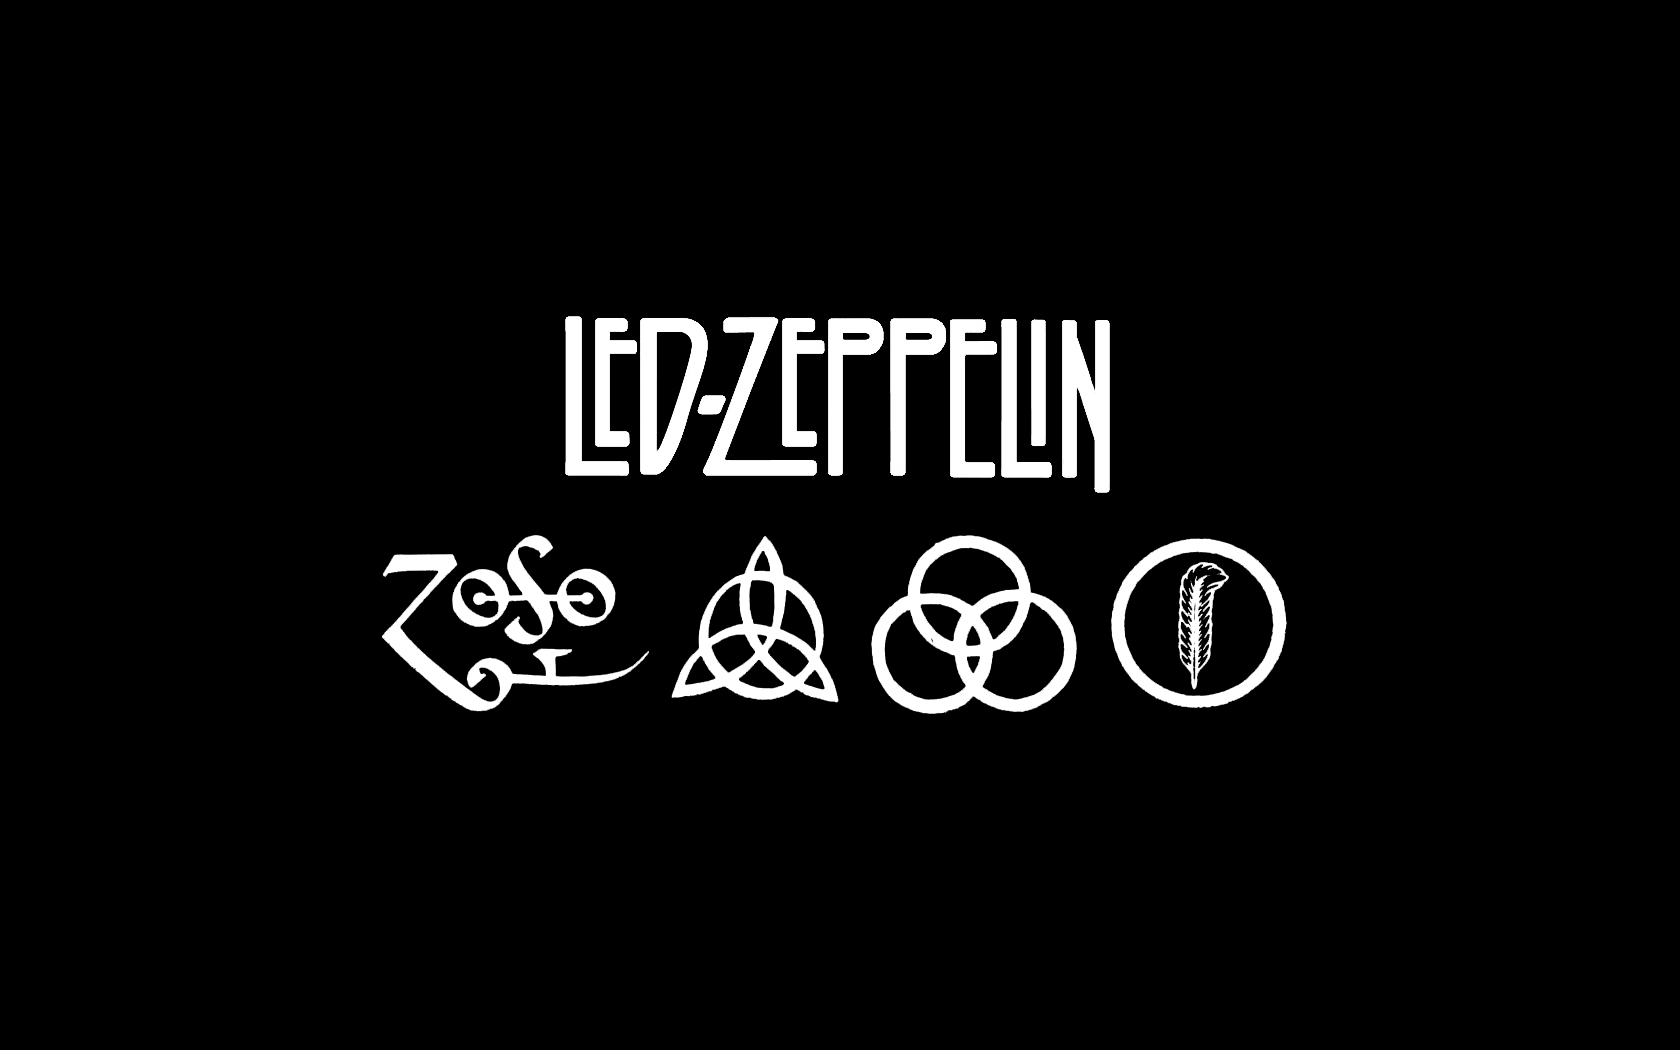 Led Zeppelin Puter Wallpaper Desktop Background